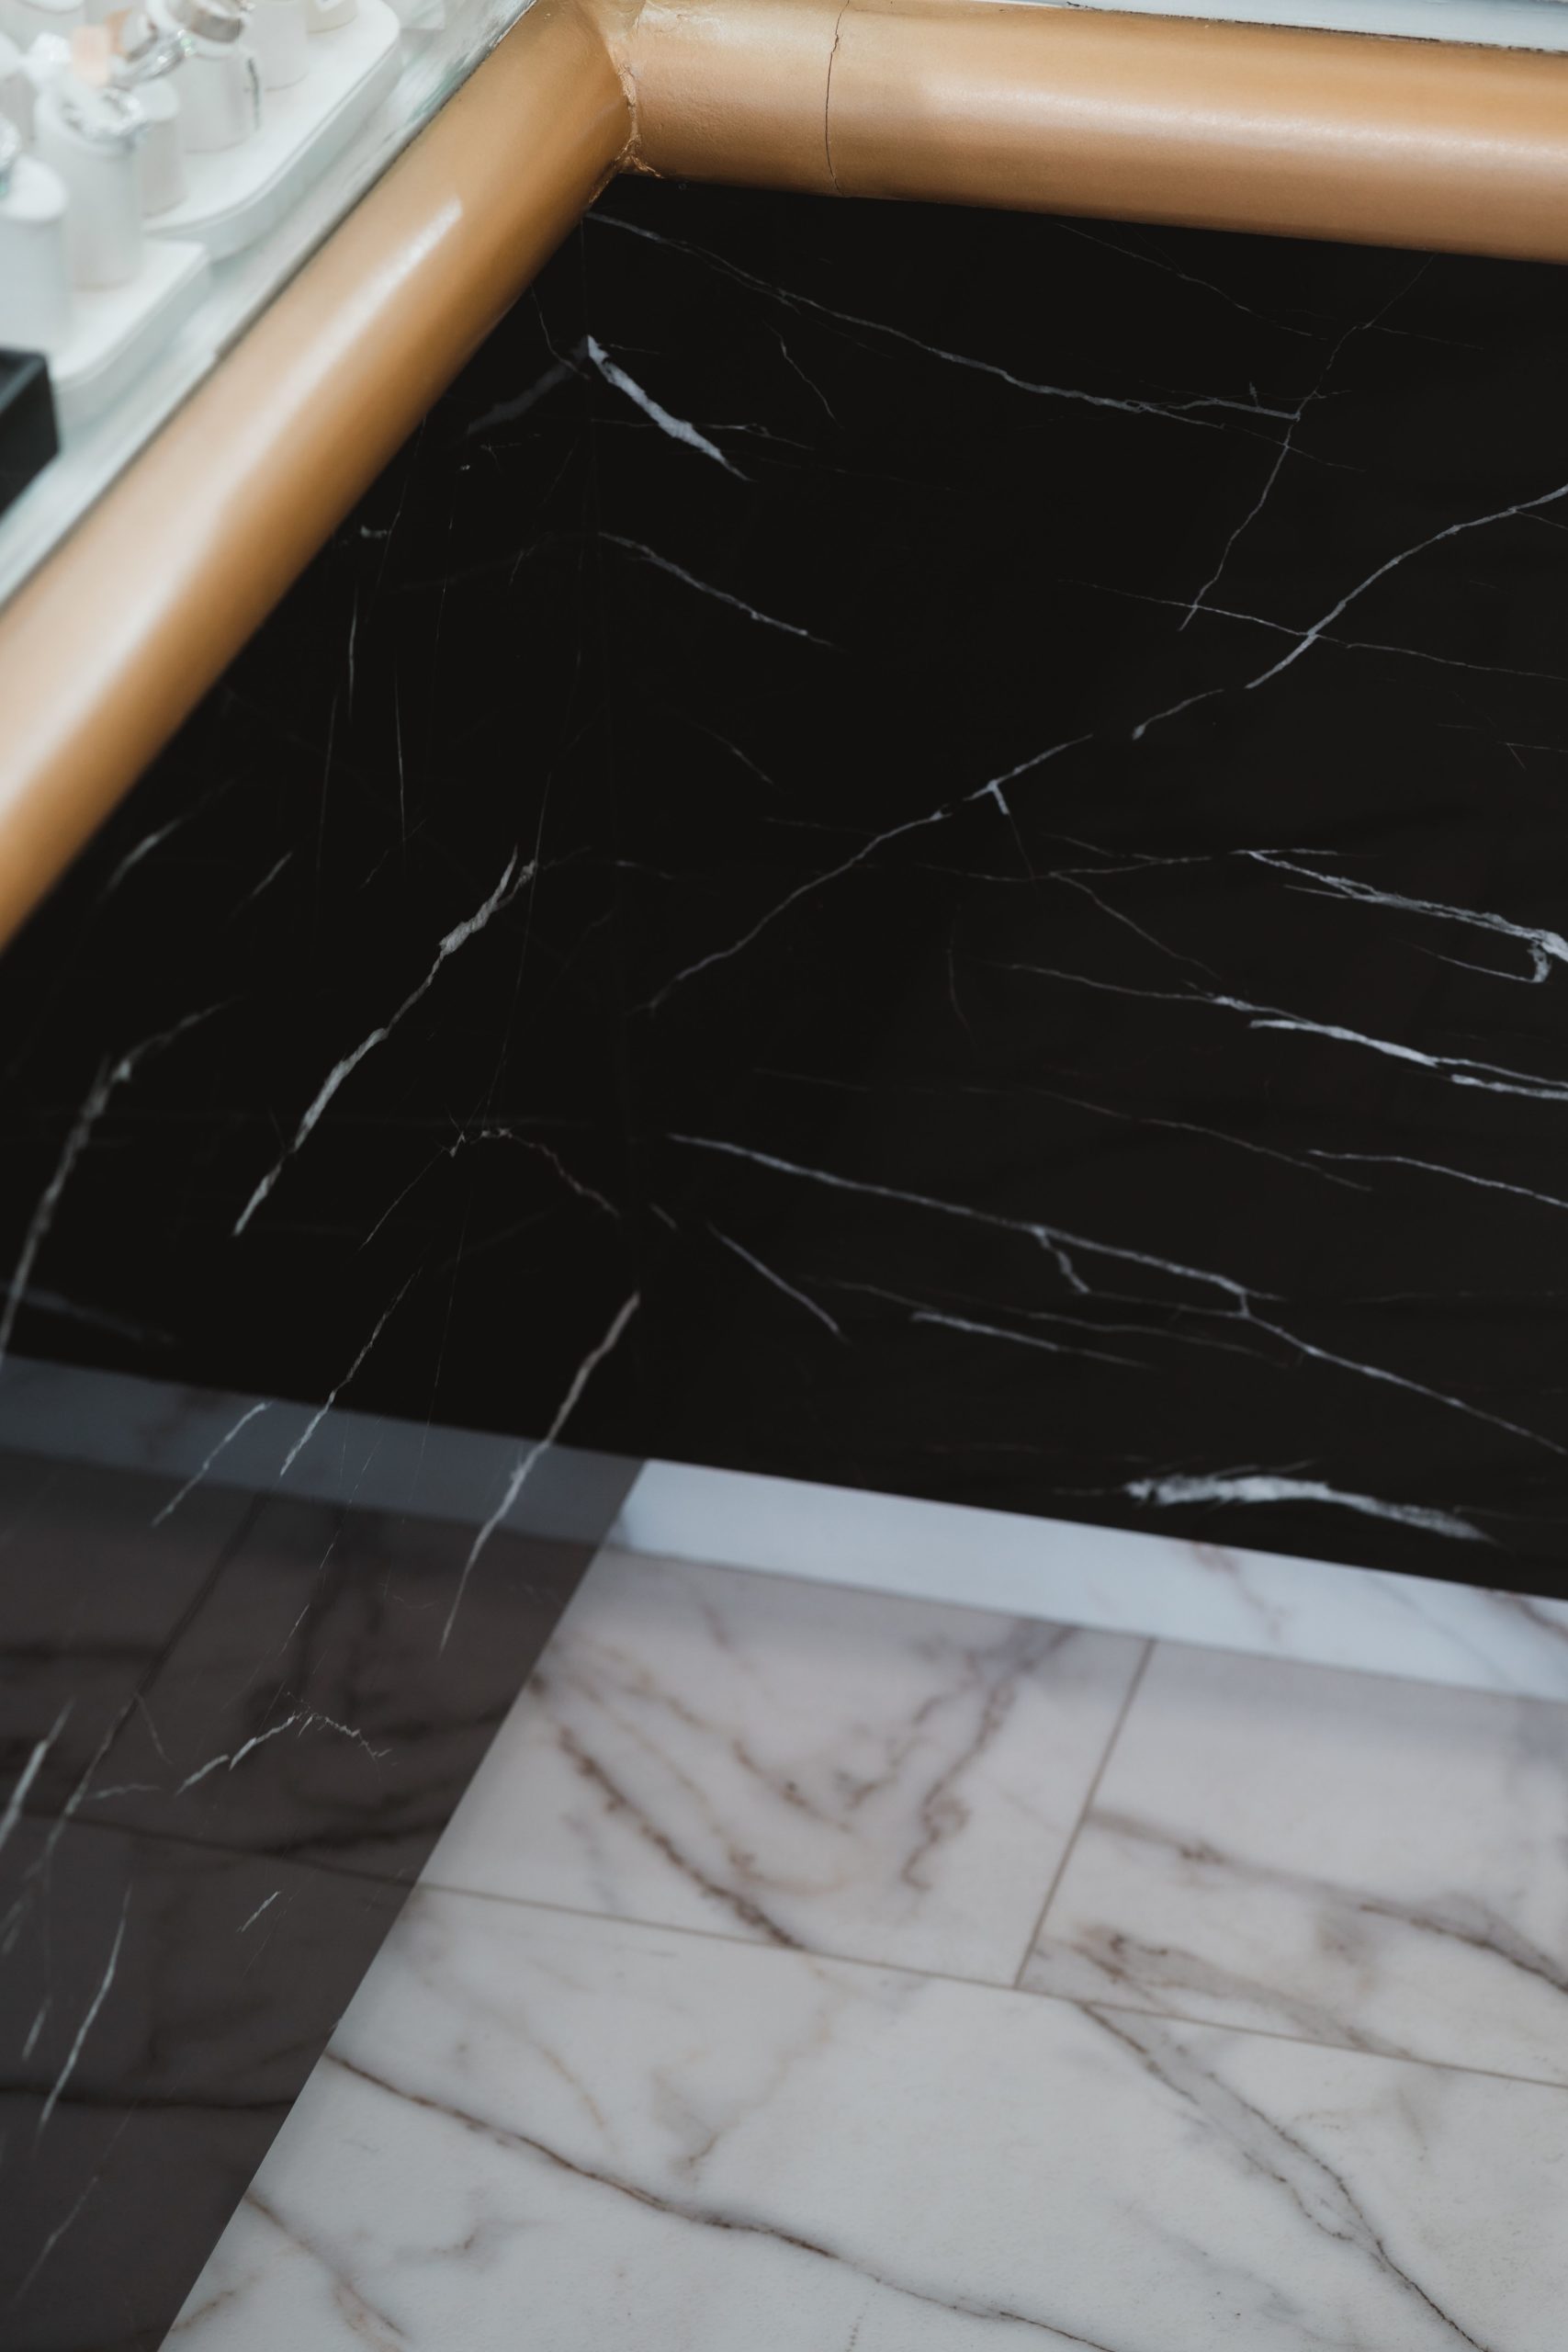 Artificial Marble sheets for kitchen back splash